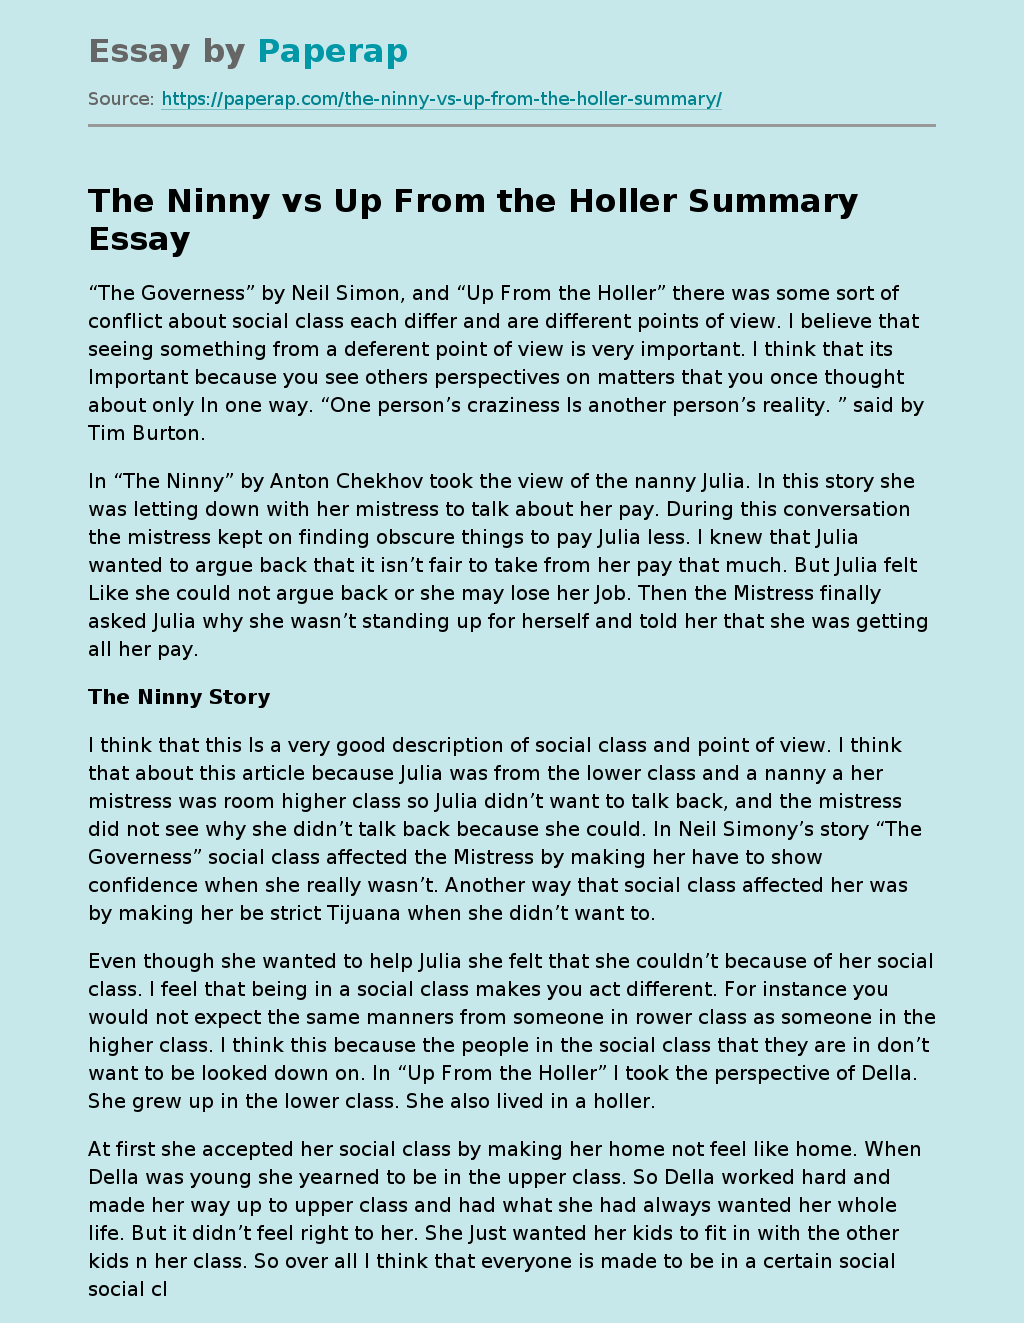 The Ninny vs Up From the Holler Summary